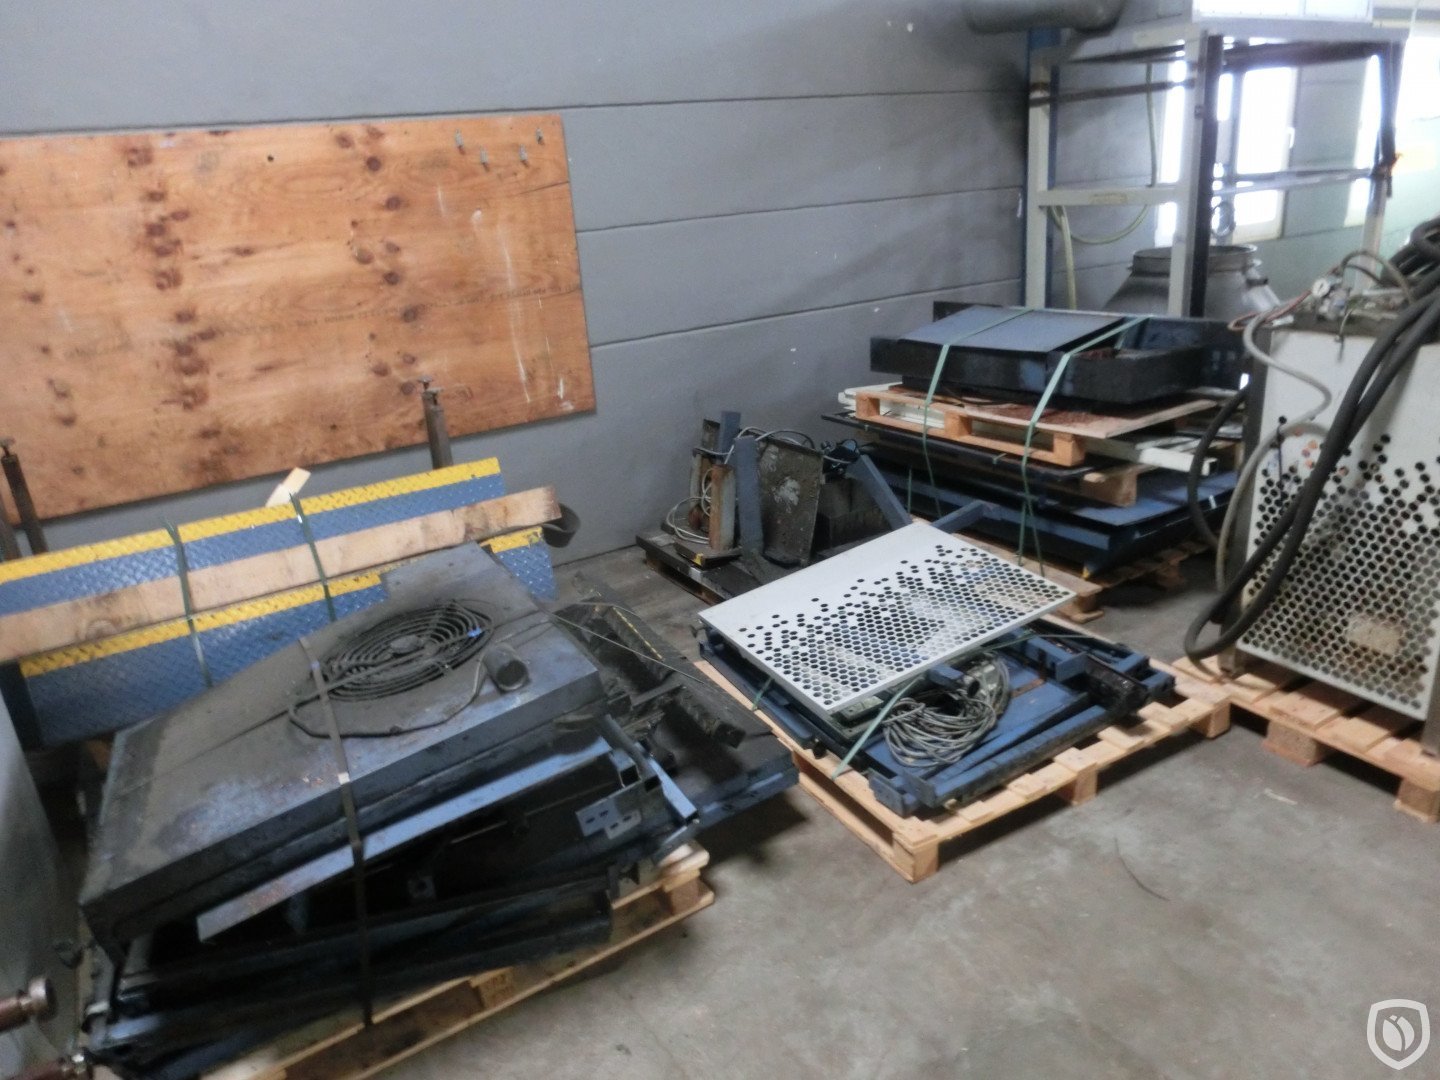 KBA METALSTAR type 1 printing presses 4C